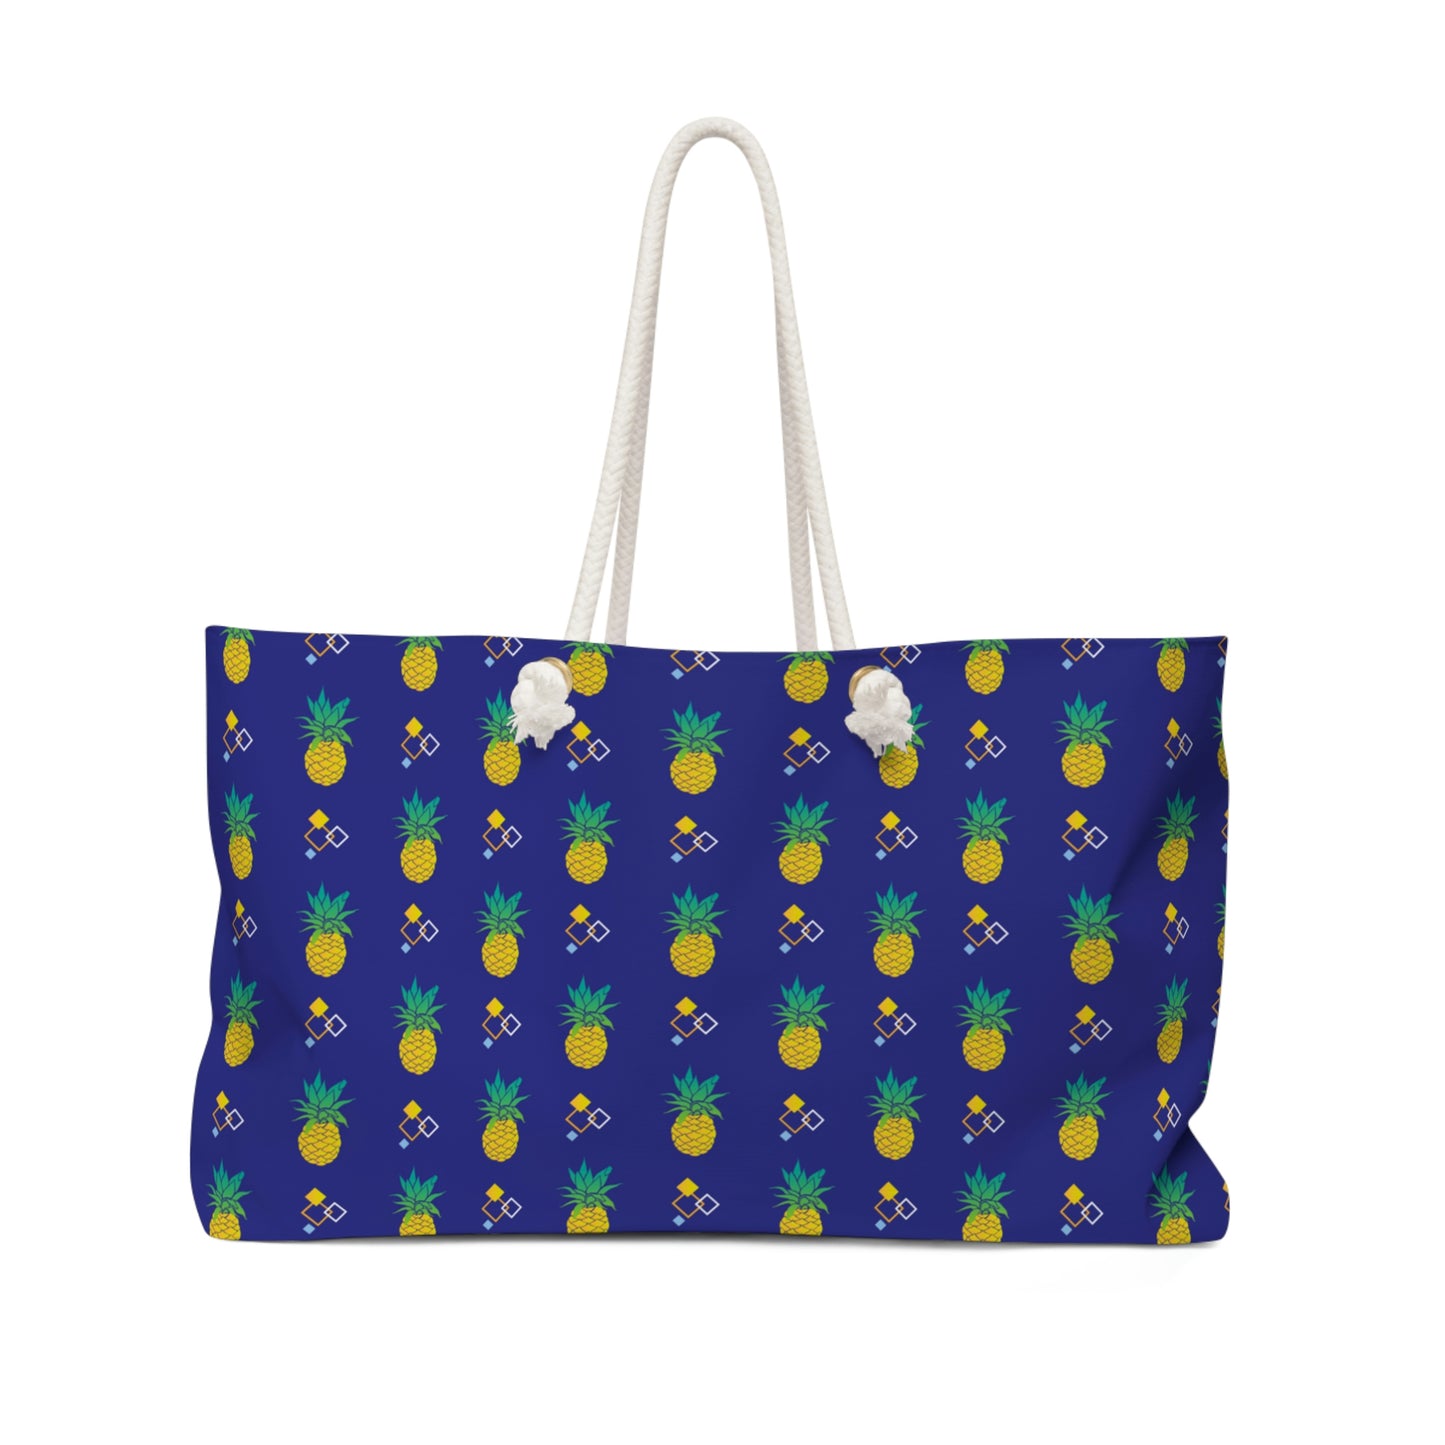 Weekender Bag Women, Beach Shoulder Bag, Blue Pineapple, Overnight Carry On Travel Bag,